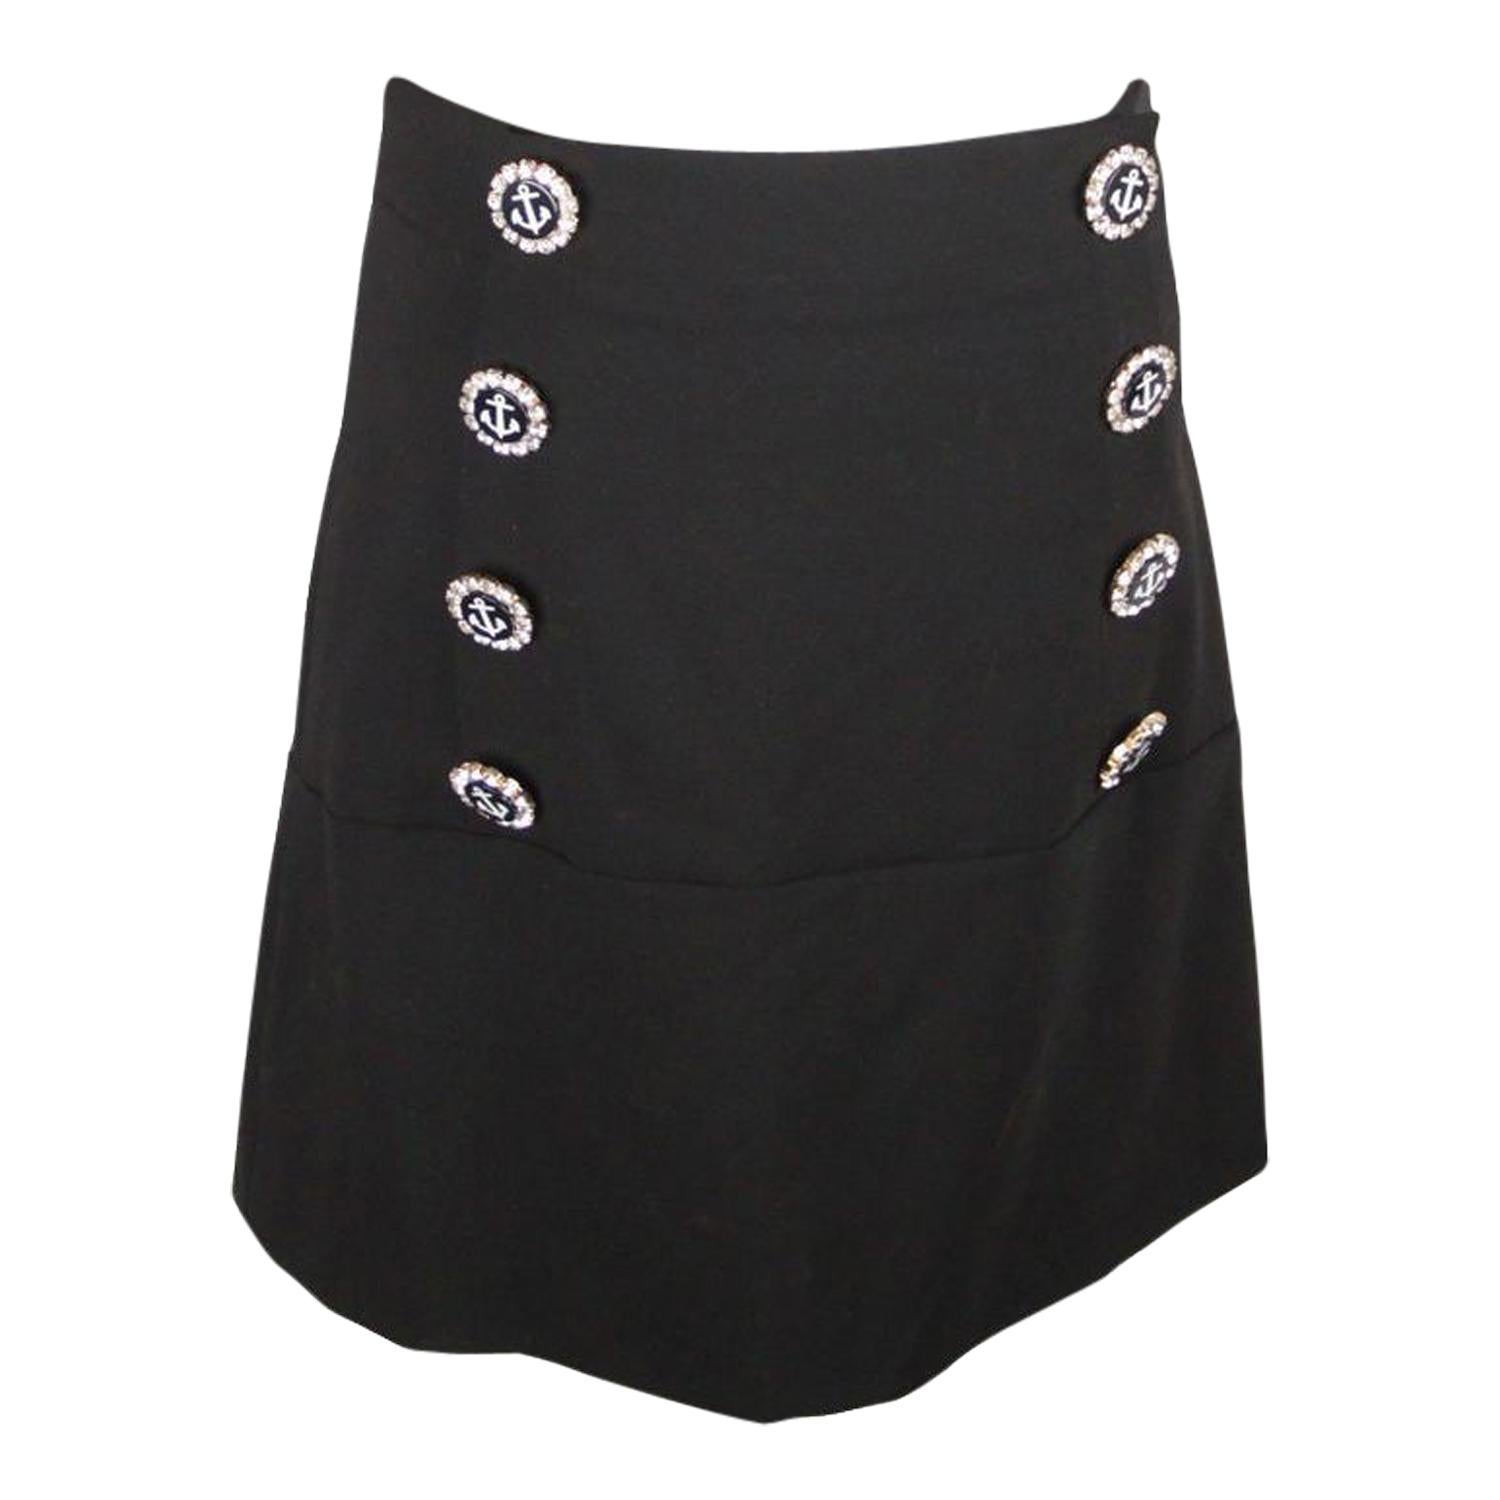 Dolce & Gabbana Black Wool Blend Buttoned Mini Skirt Size 40